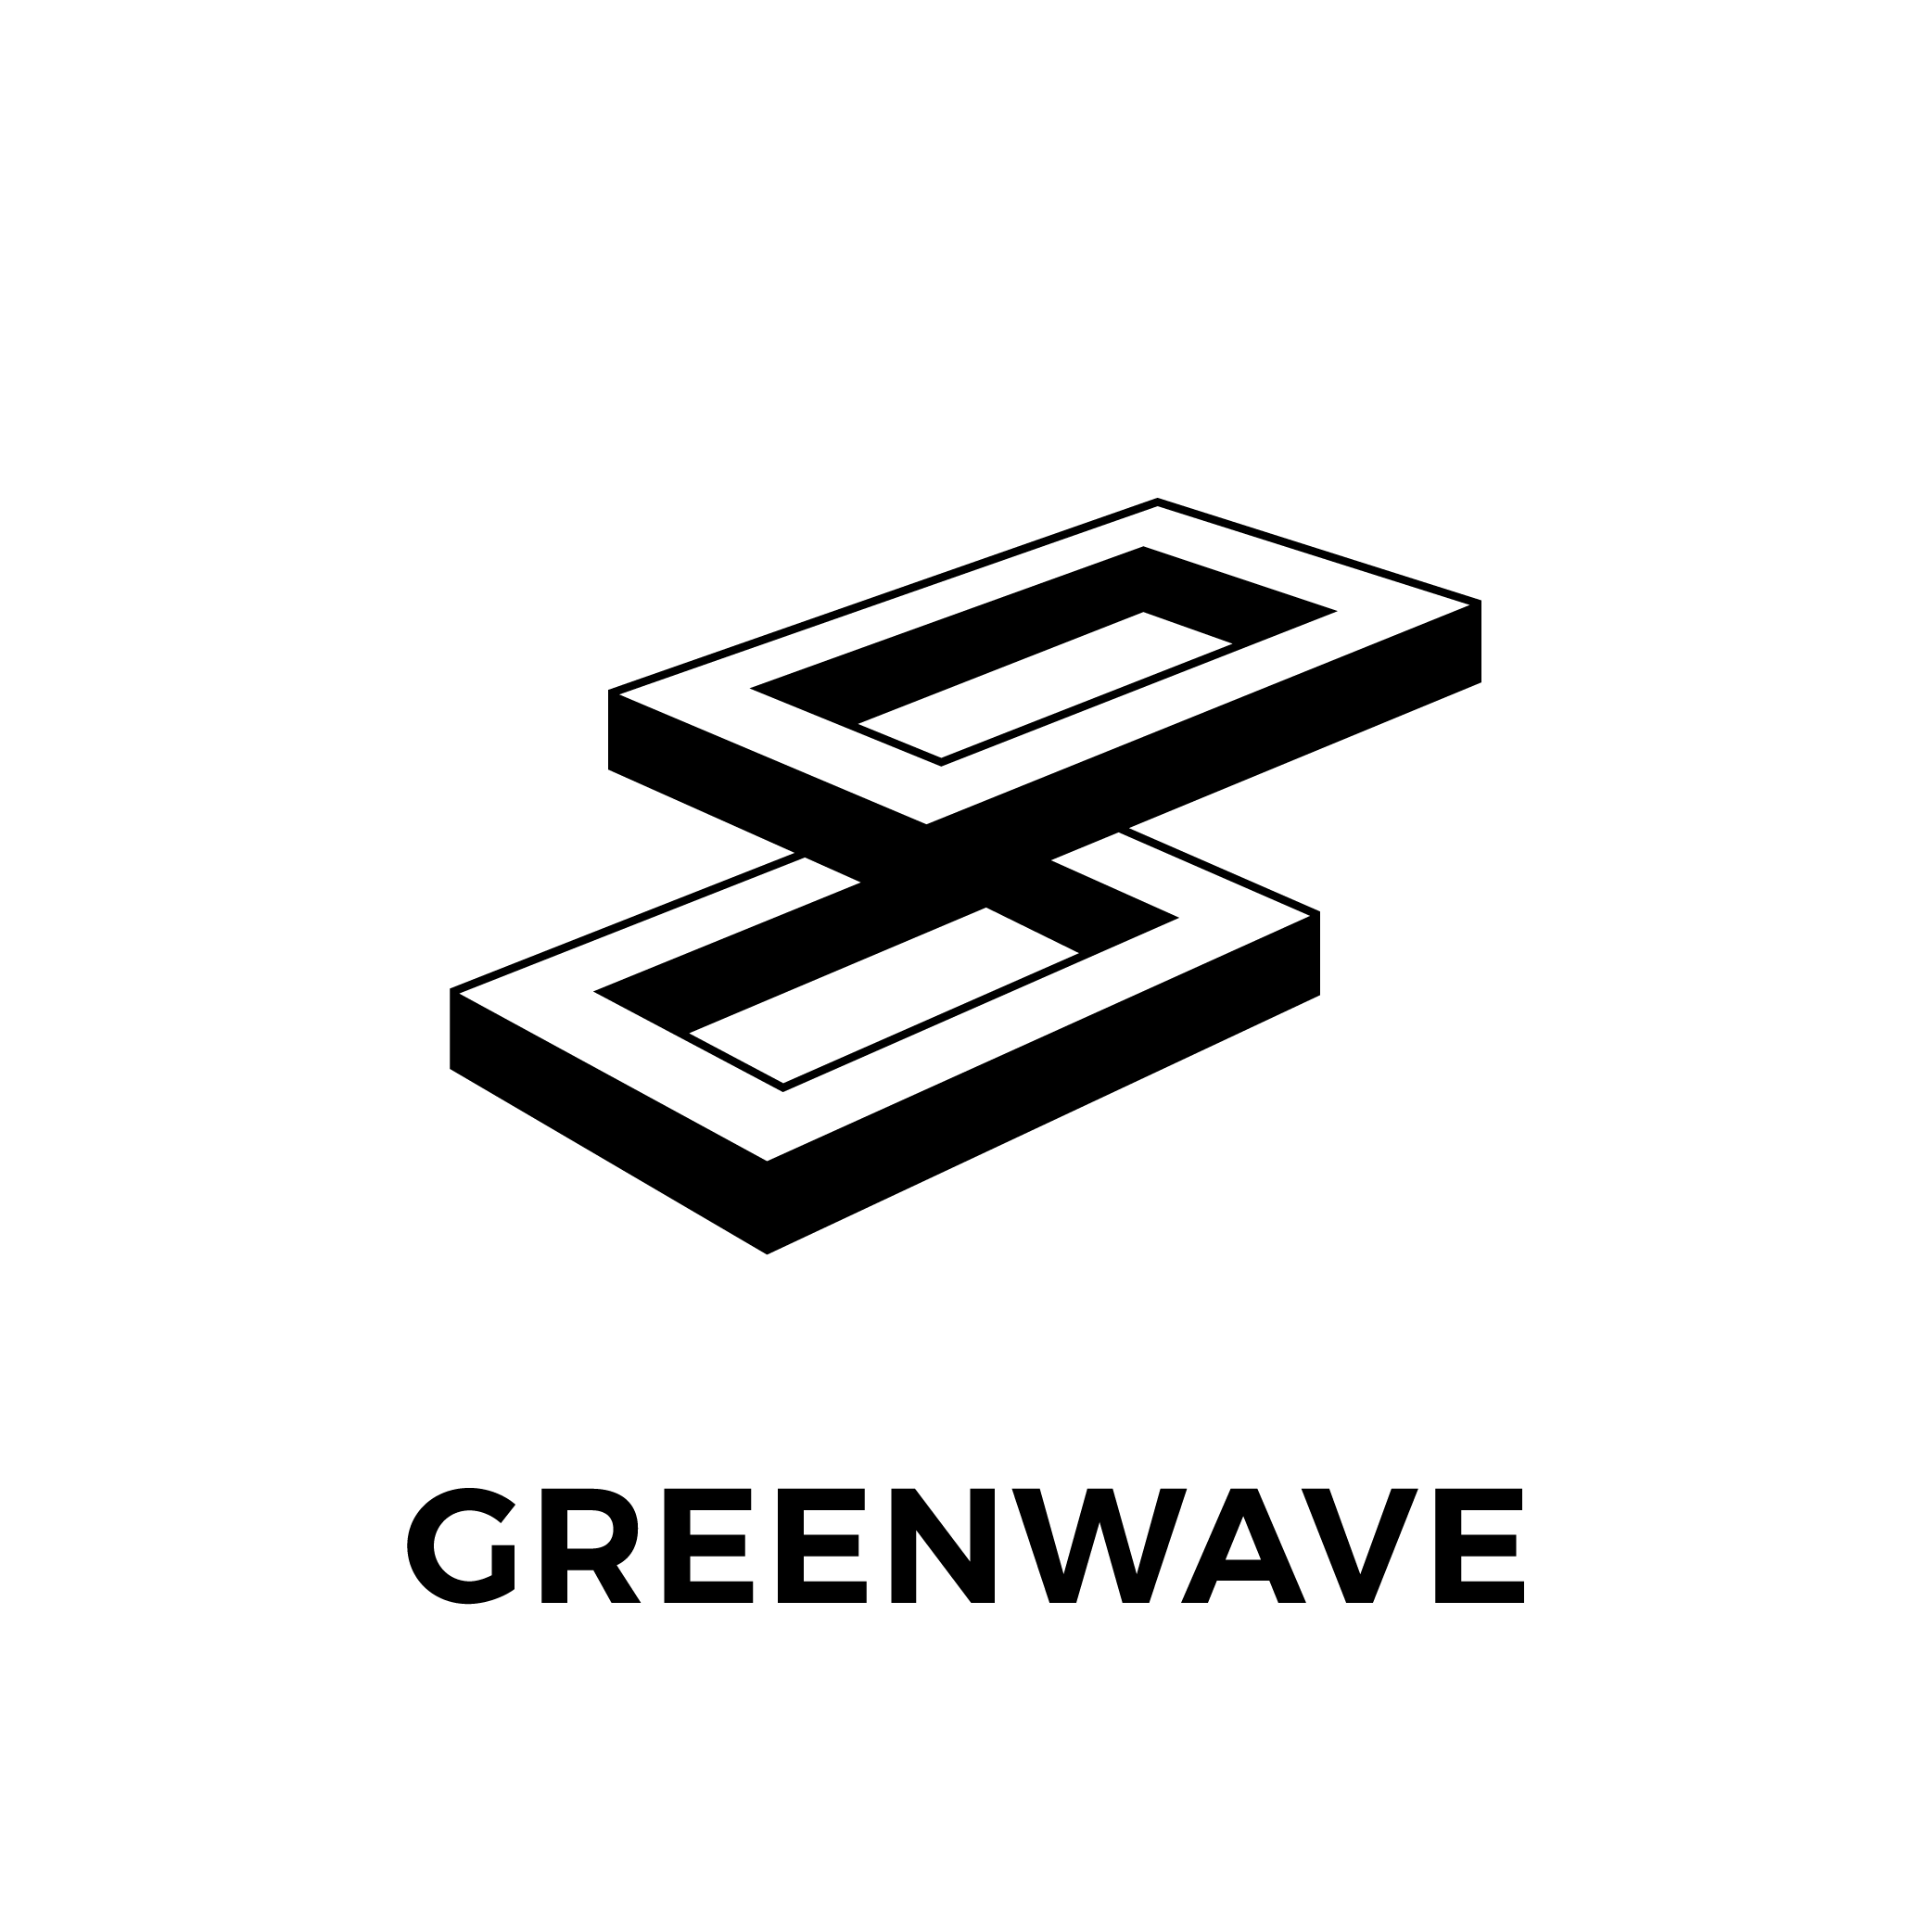 Greenwave logo - black